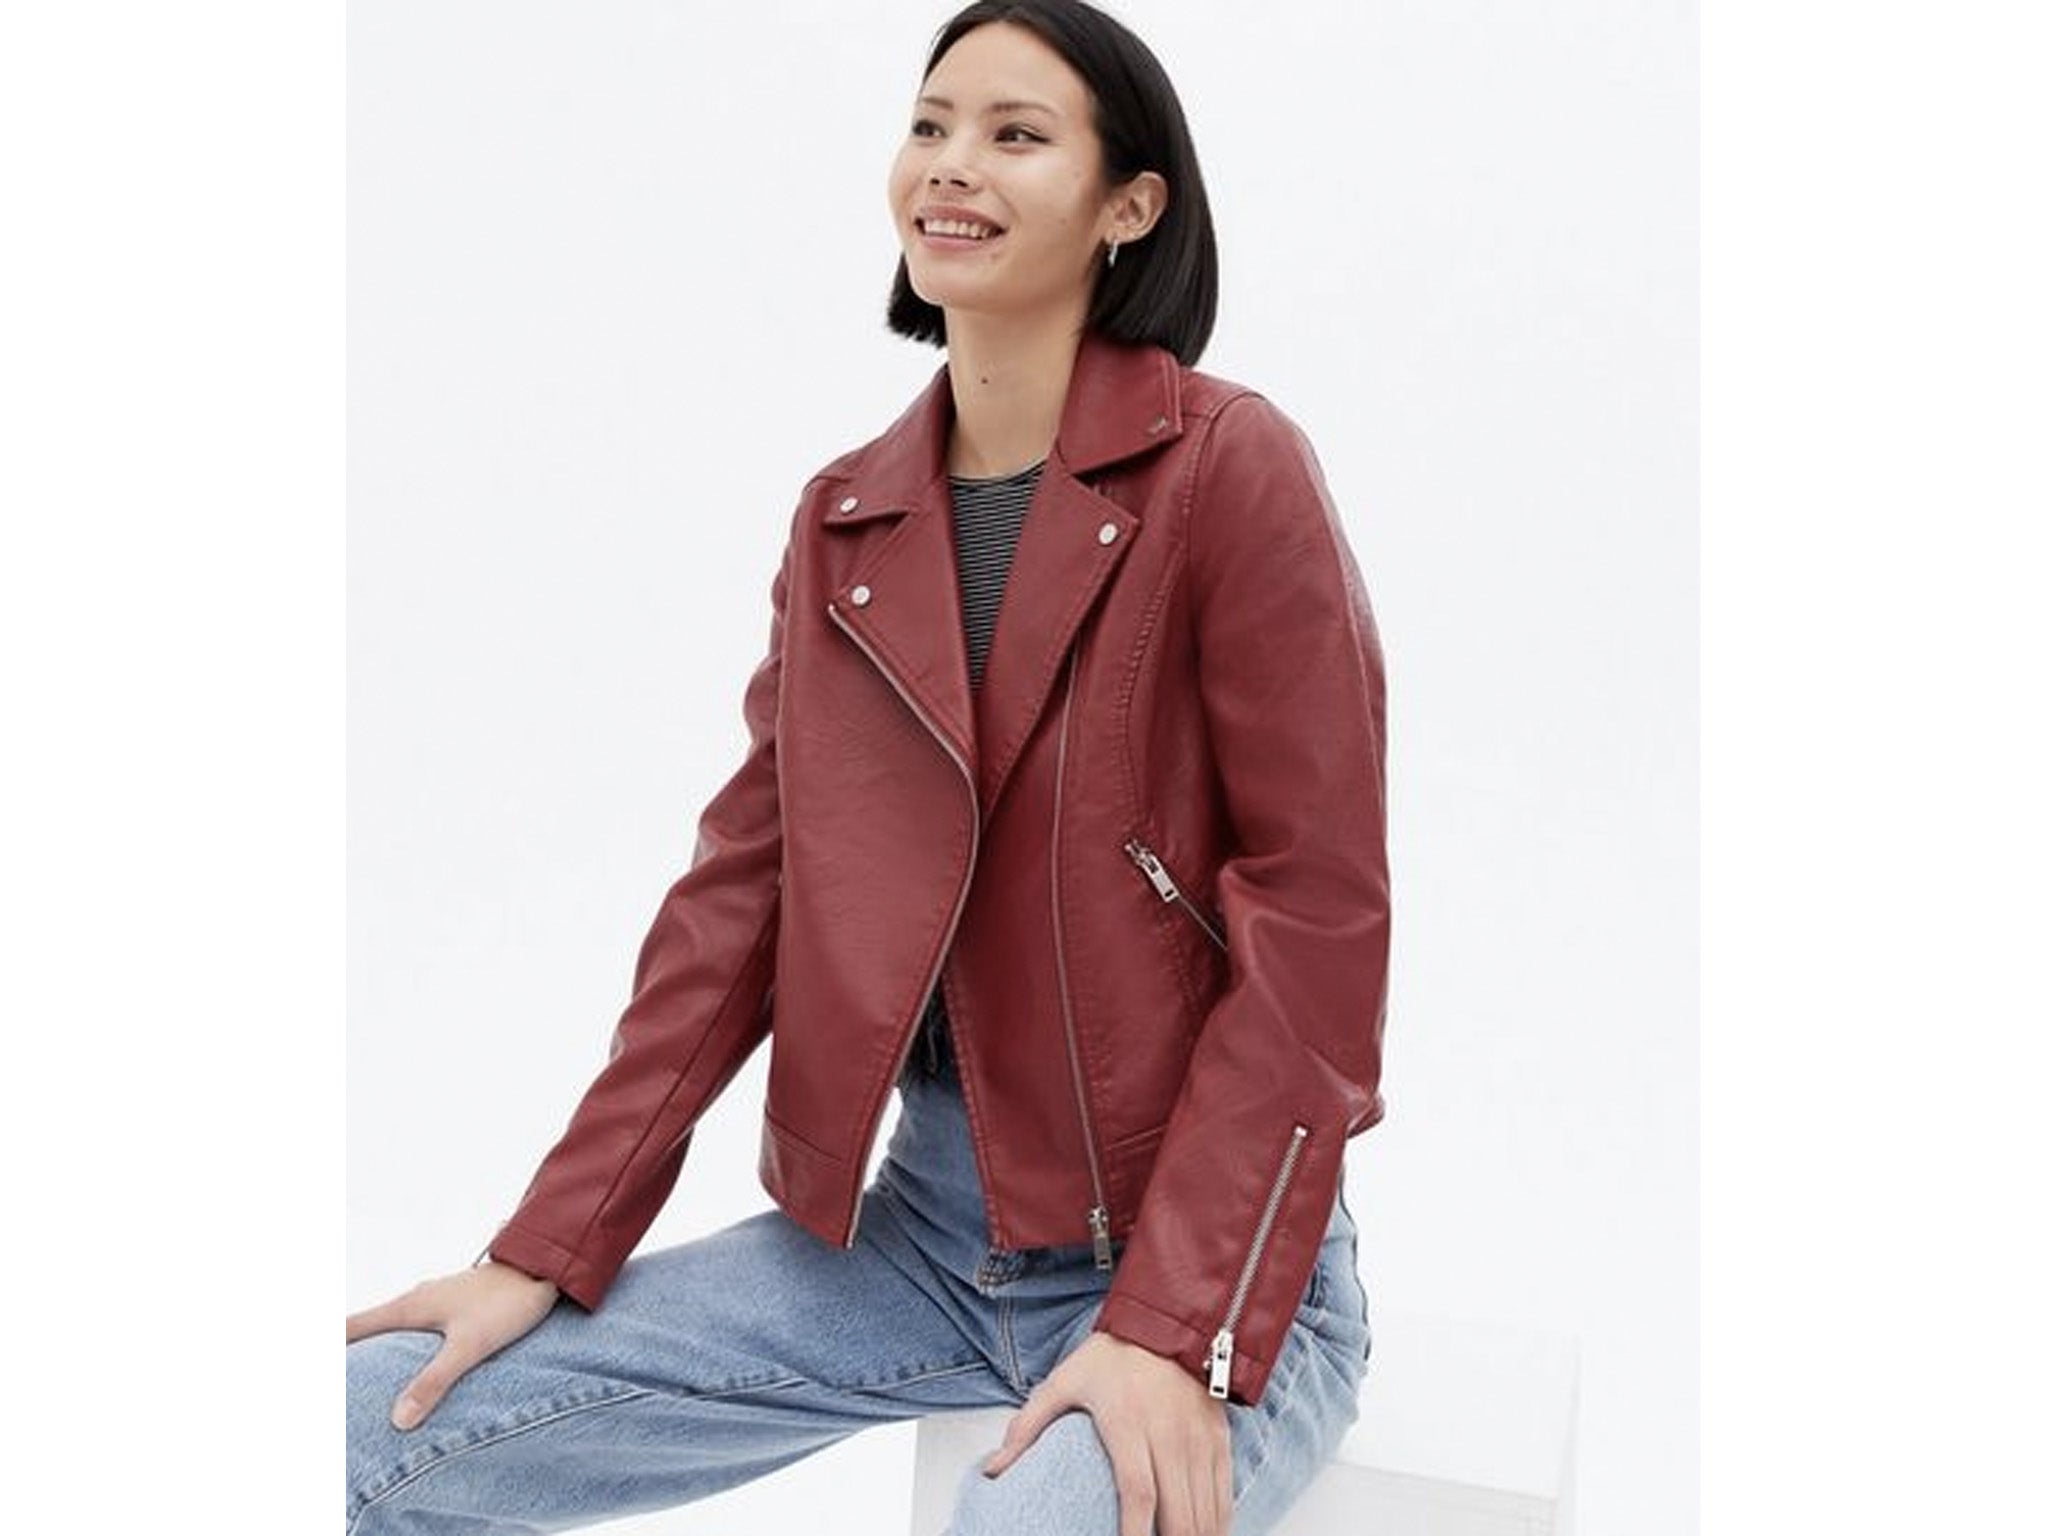 NACY Womens Slim Fit Soft Faux Leather Jacket Coat Outwear with Pocket Waterproof